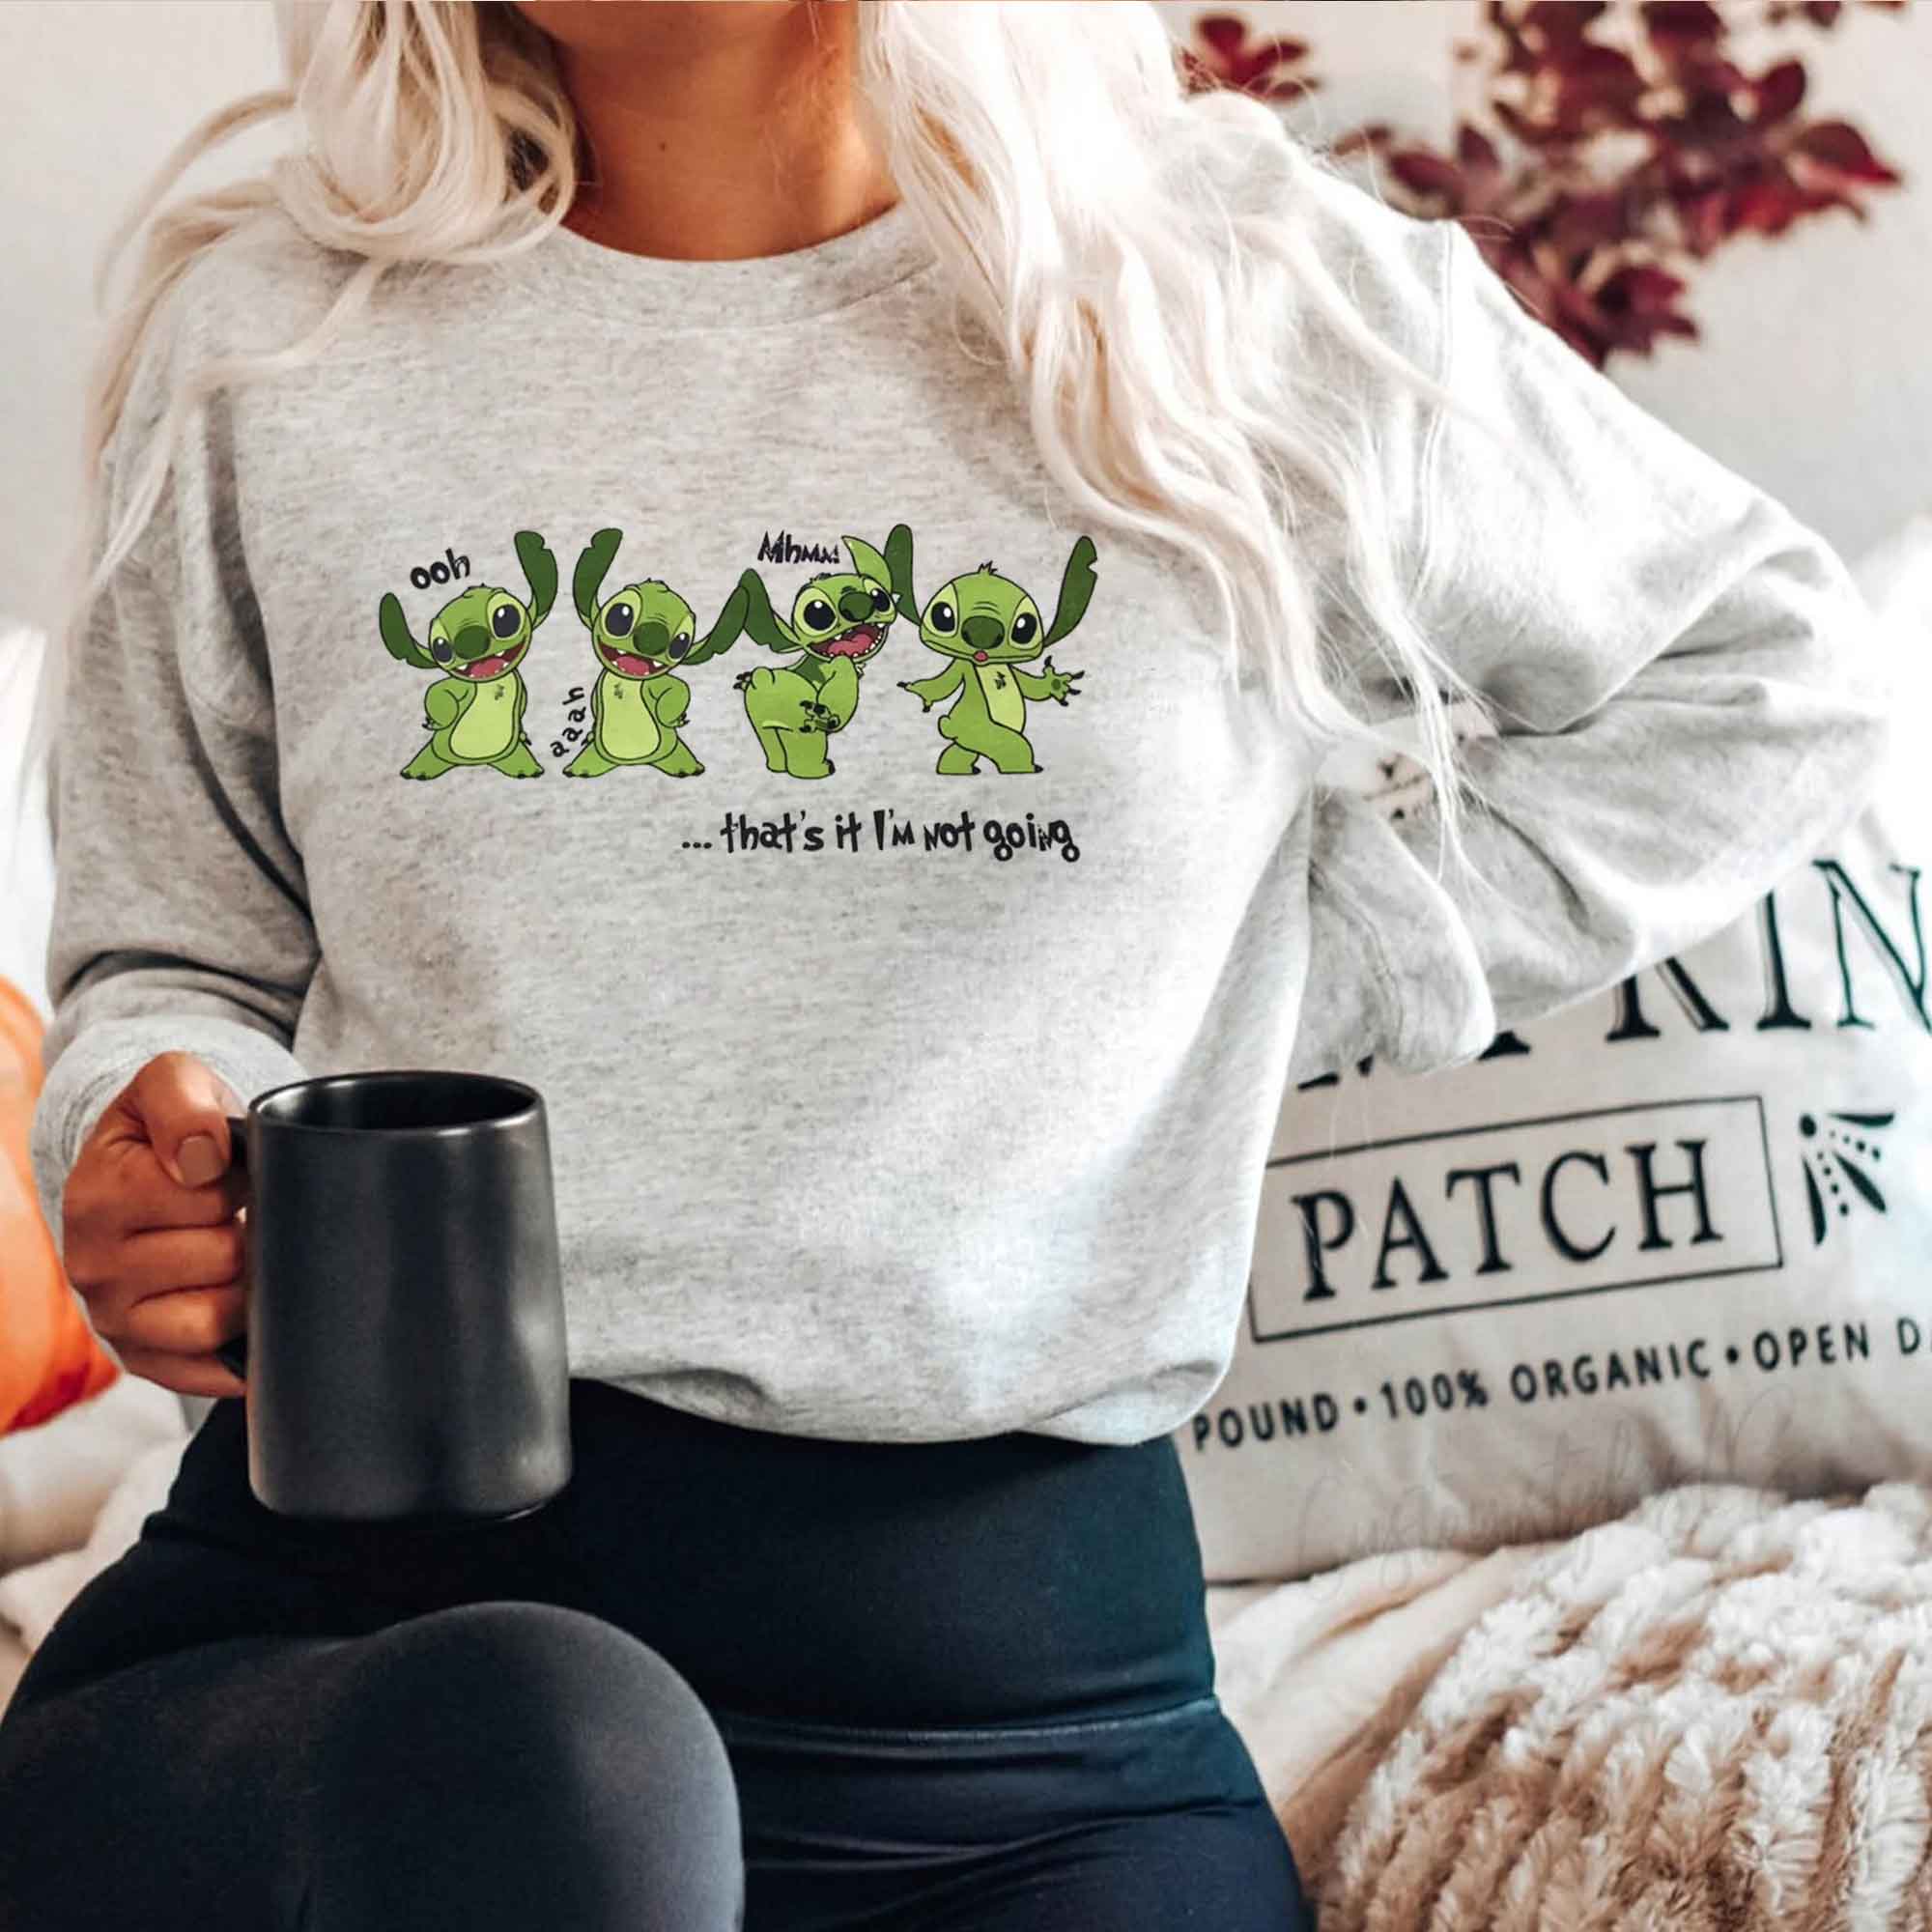 Grinch Christmas Coffee Cups Sweatshirt - Western Meowdy